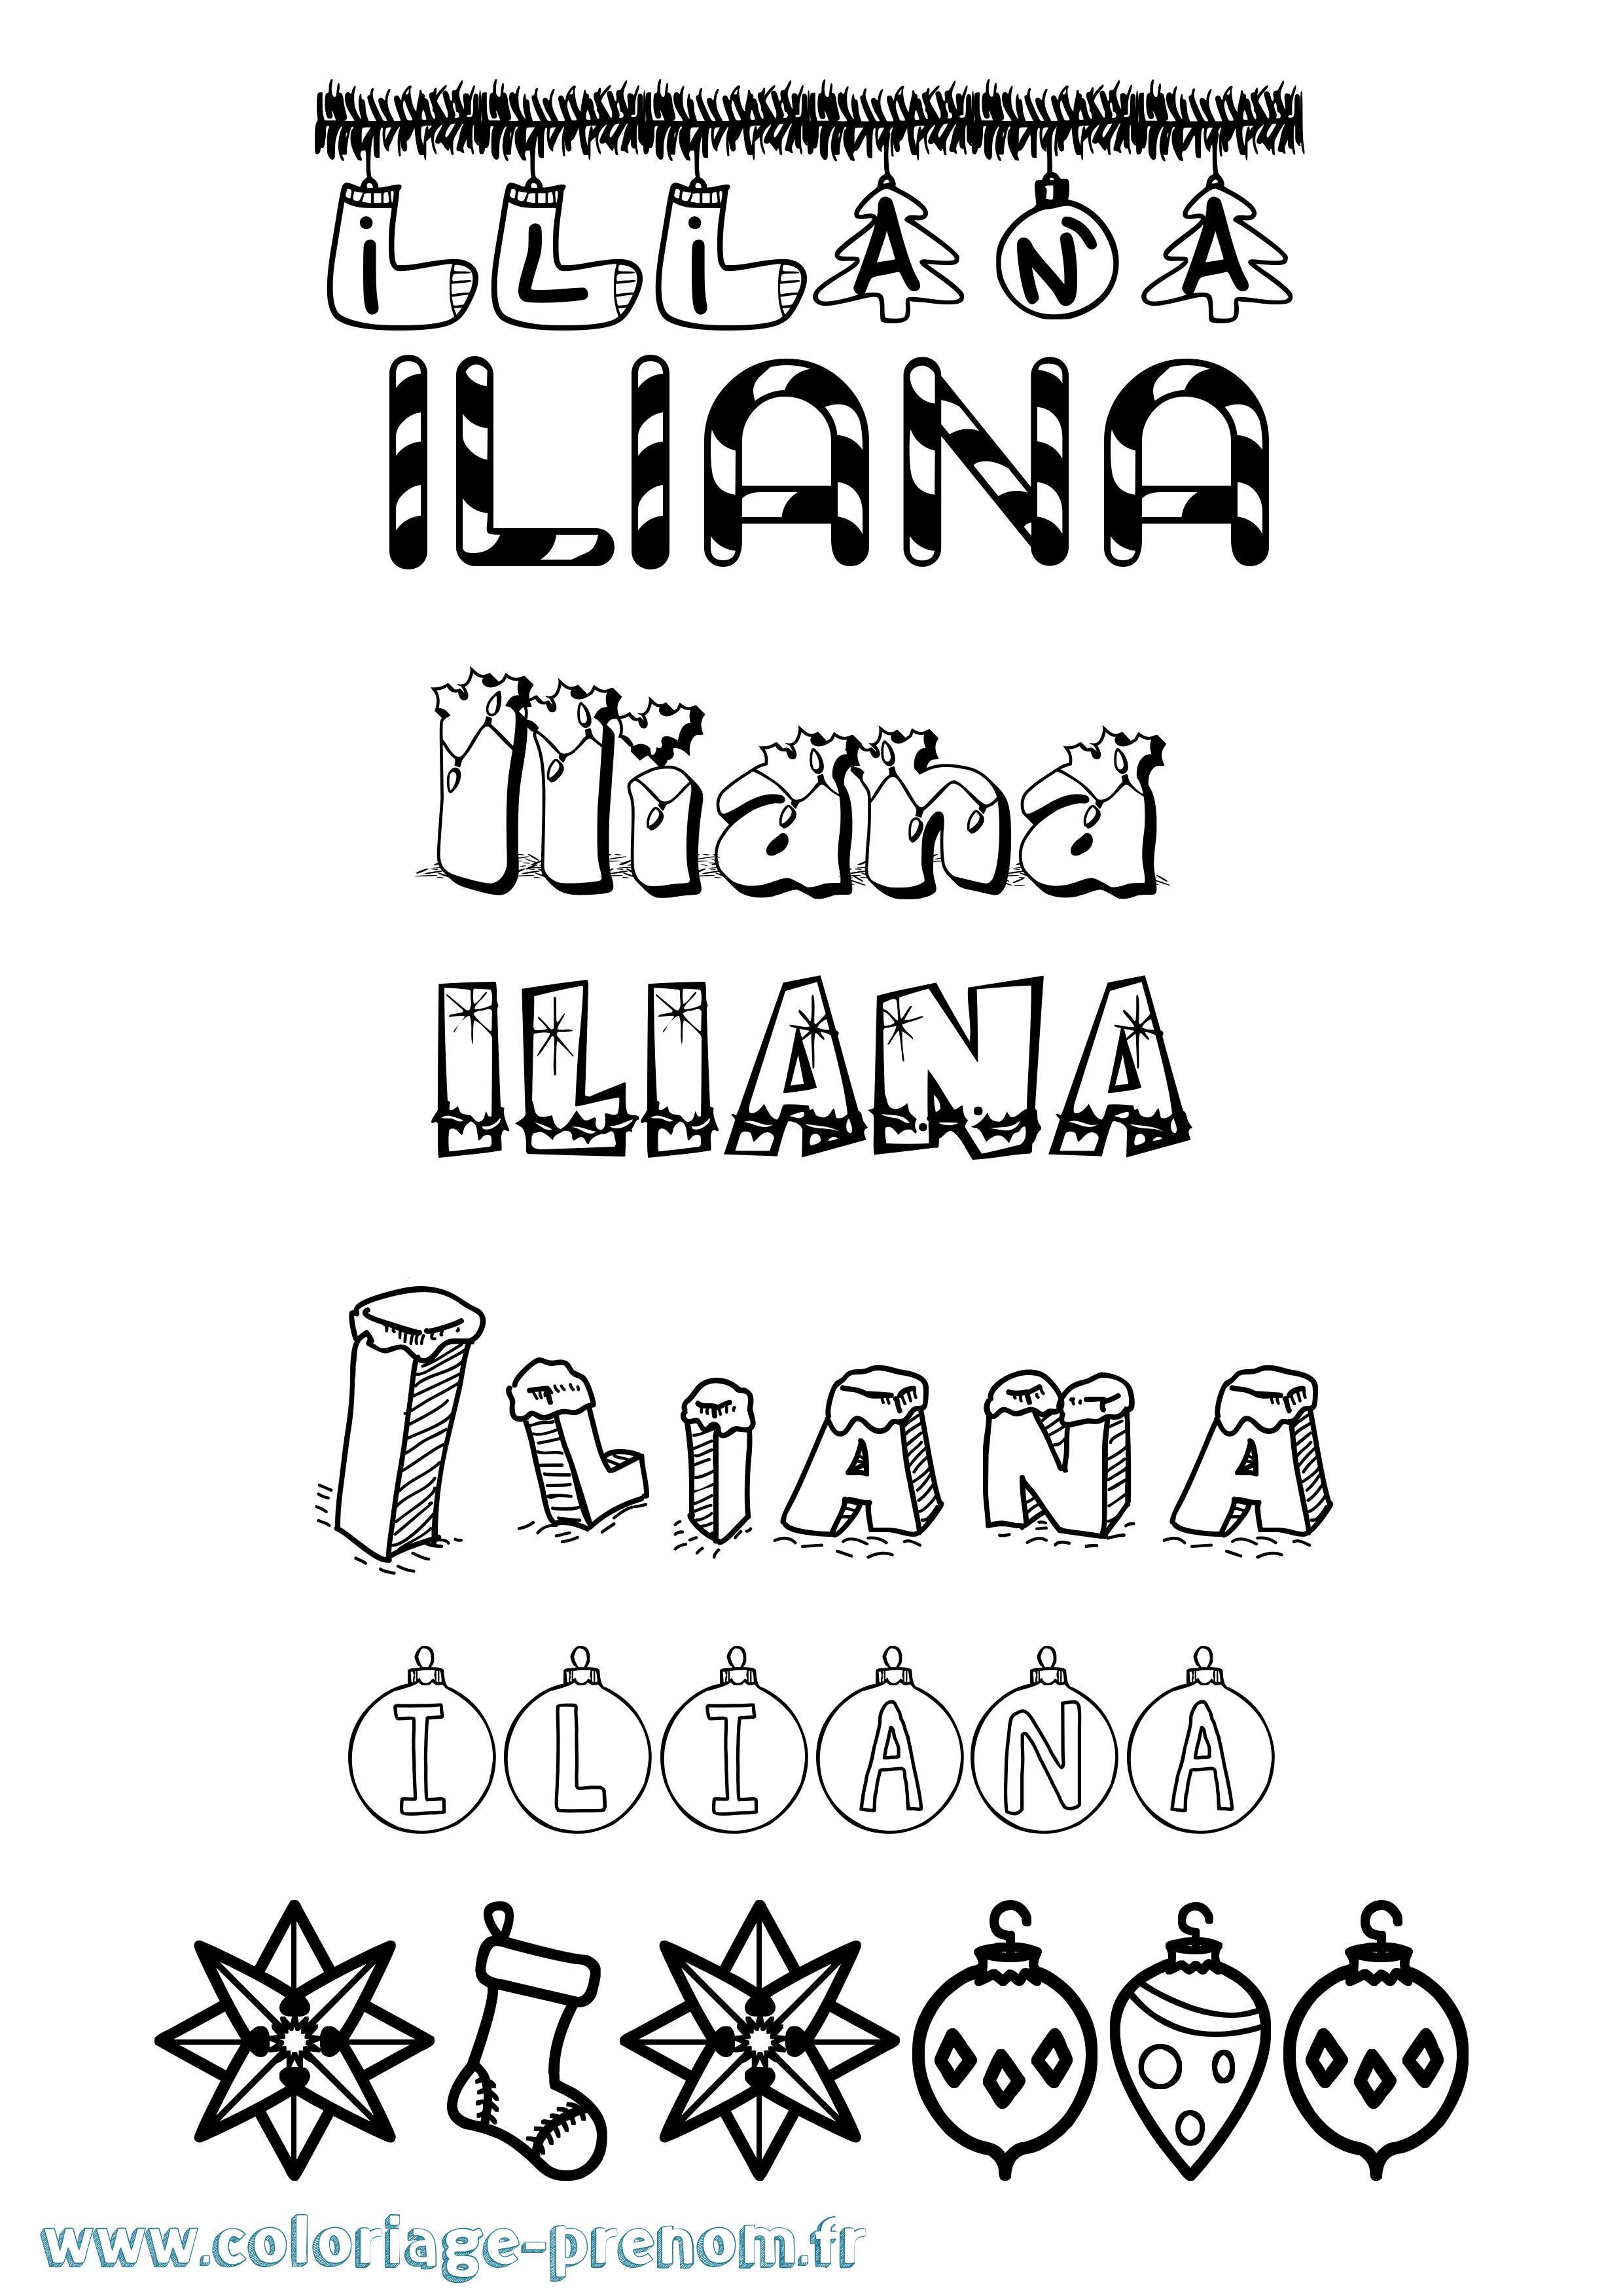 Coloriage prénom Iliana Noël